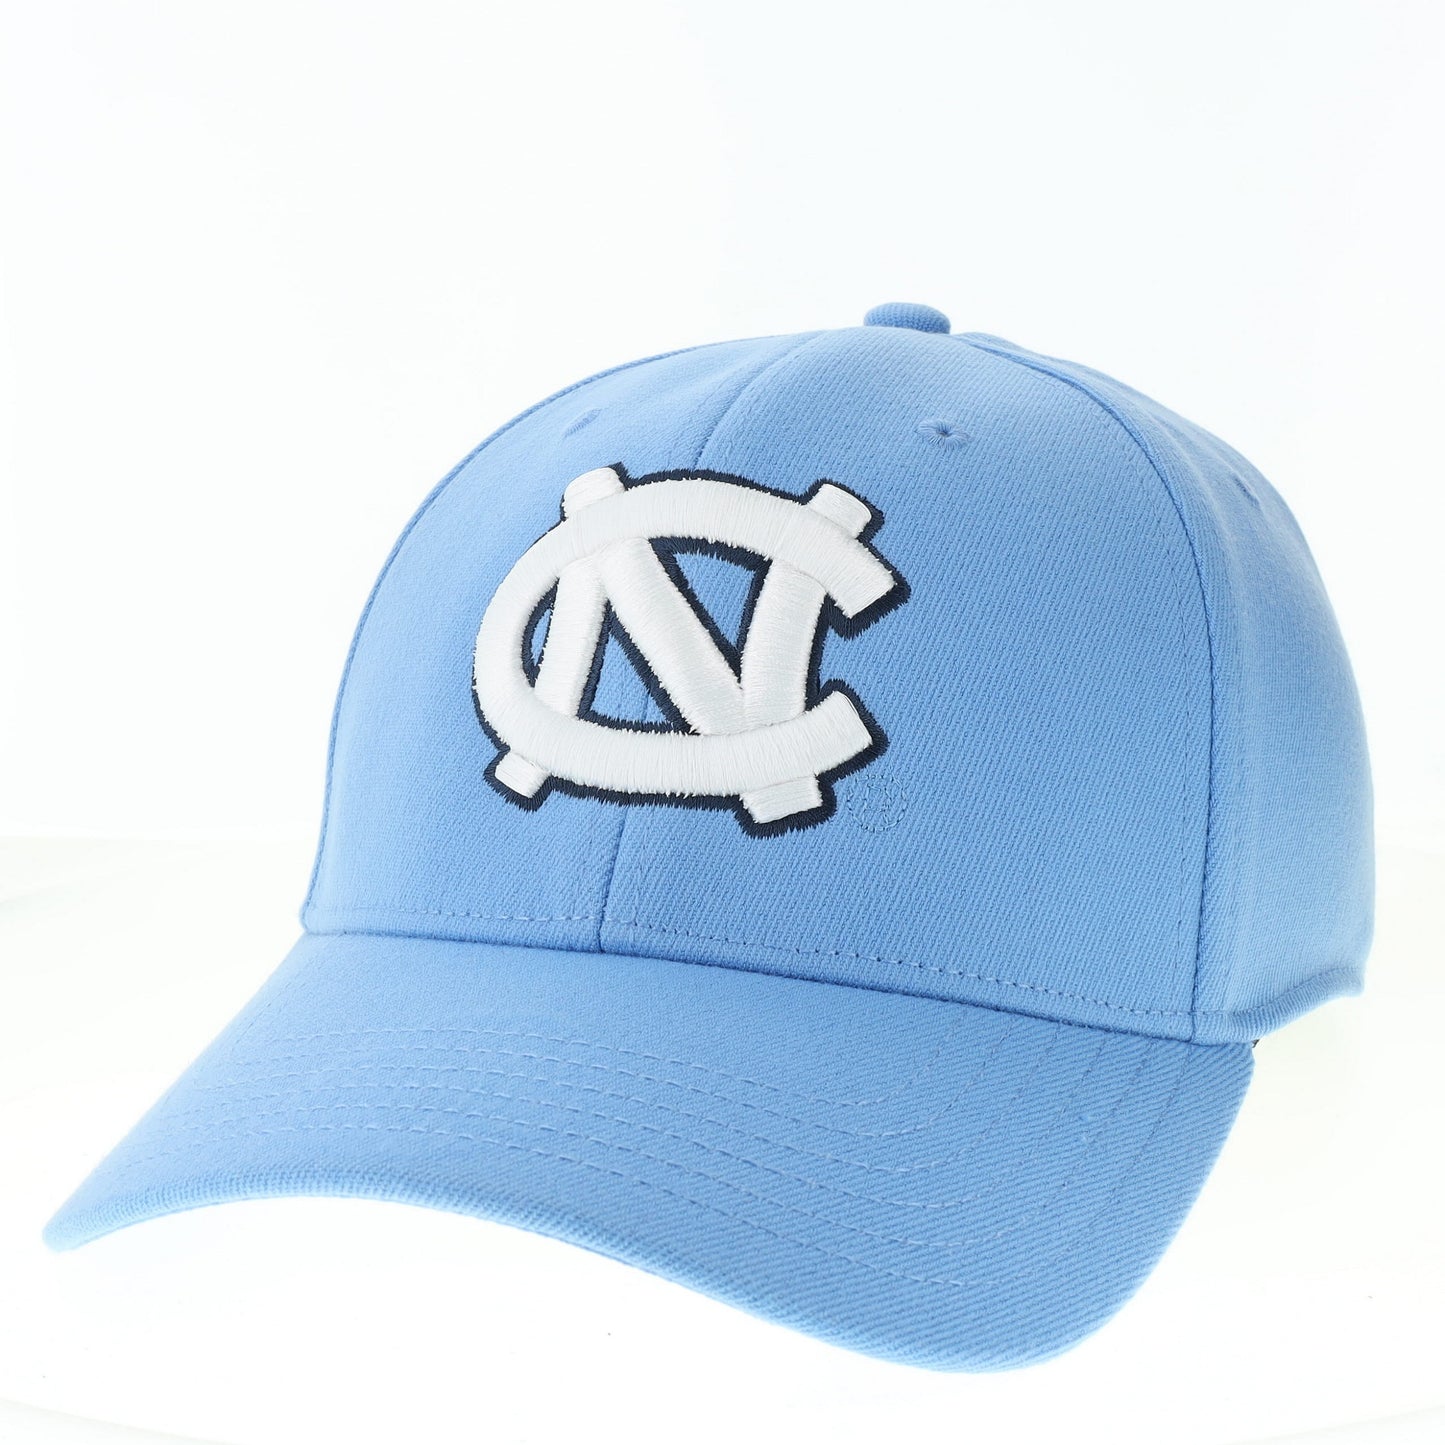 North Carolina Tar Heels Blue Stretch Fit Hat